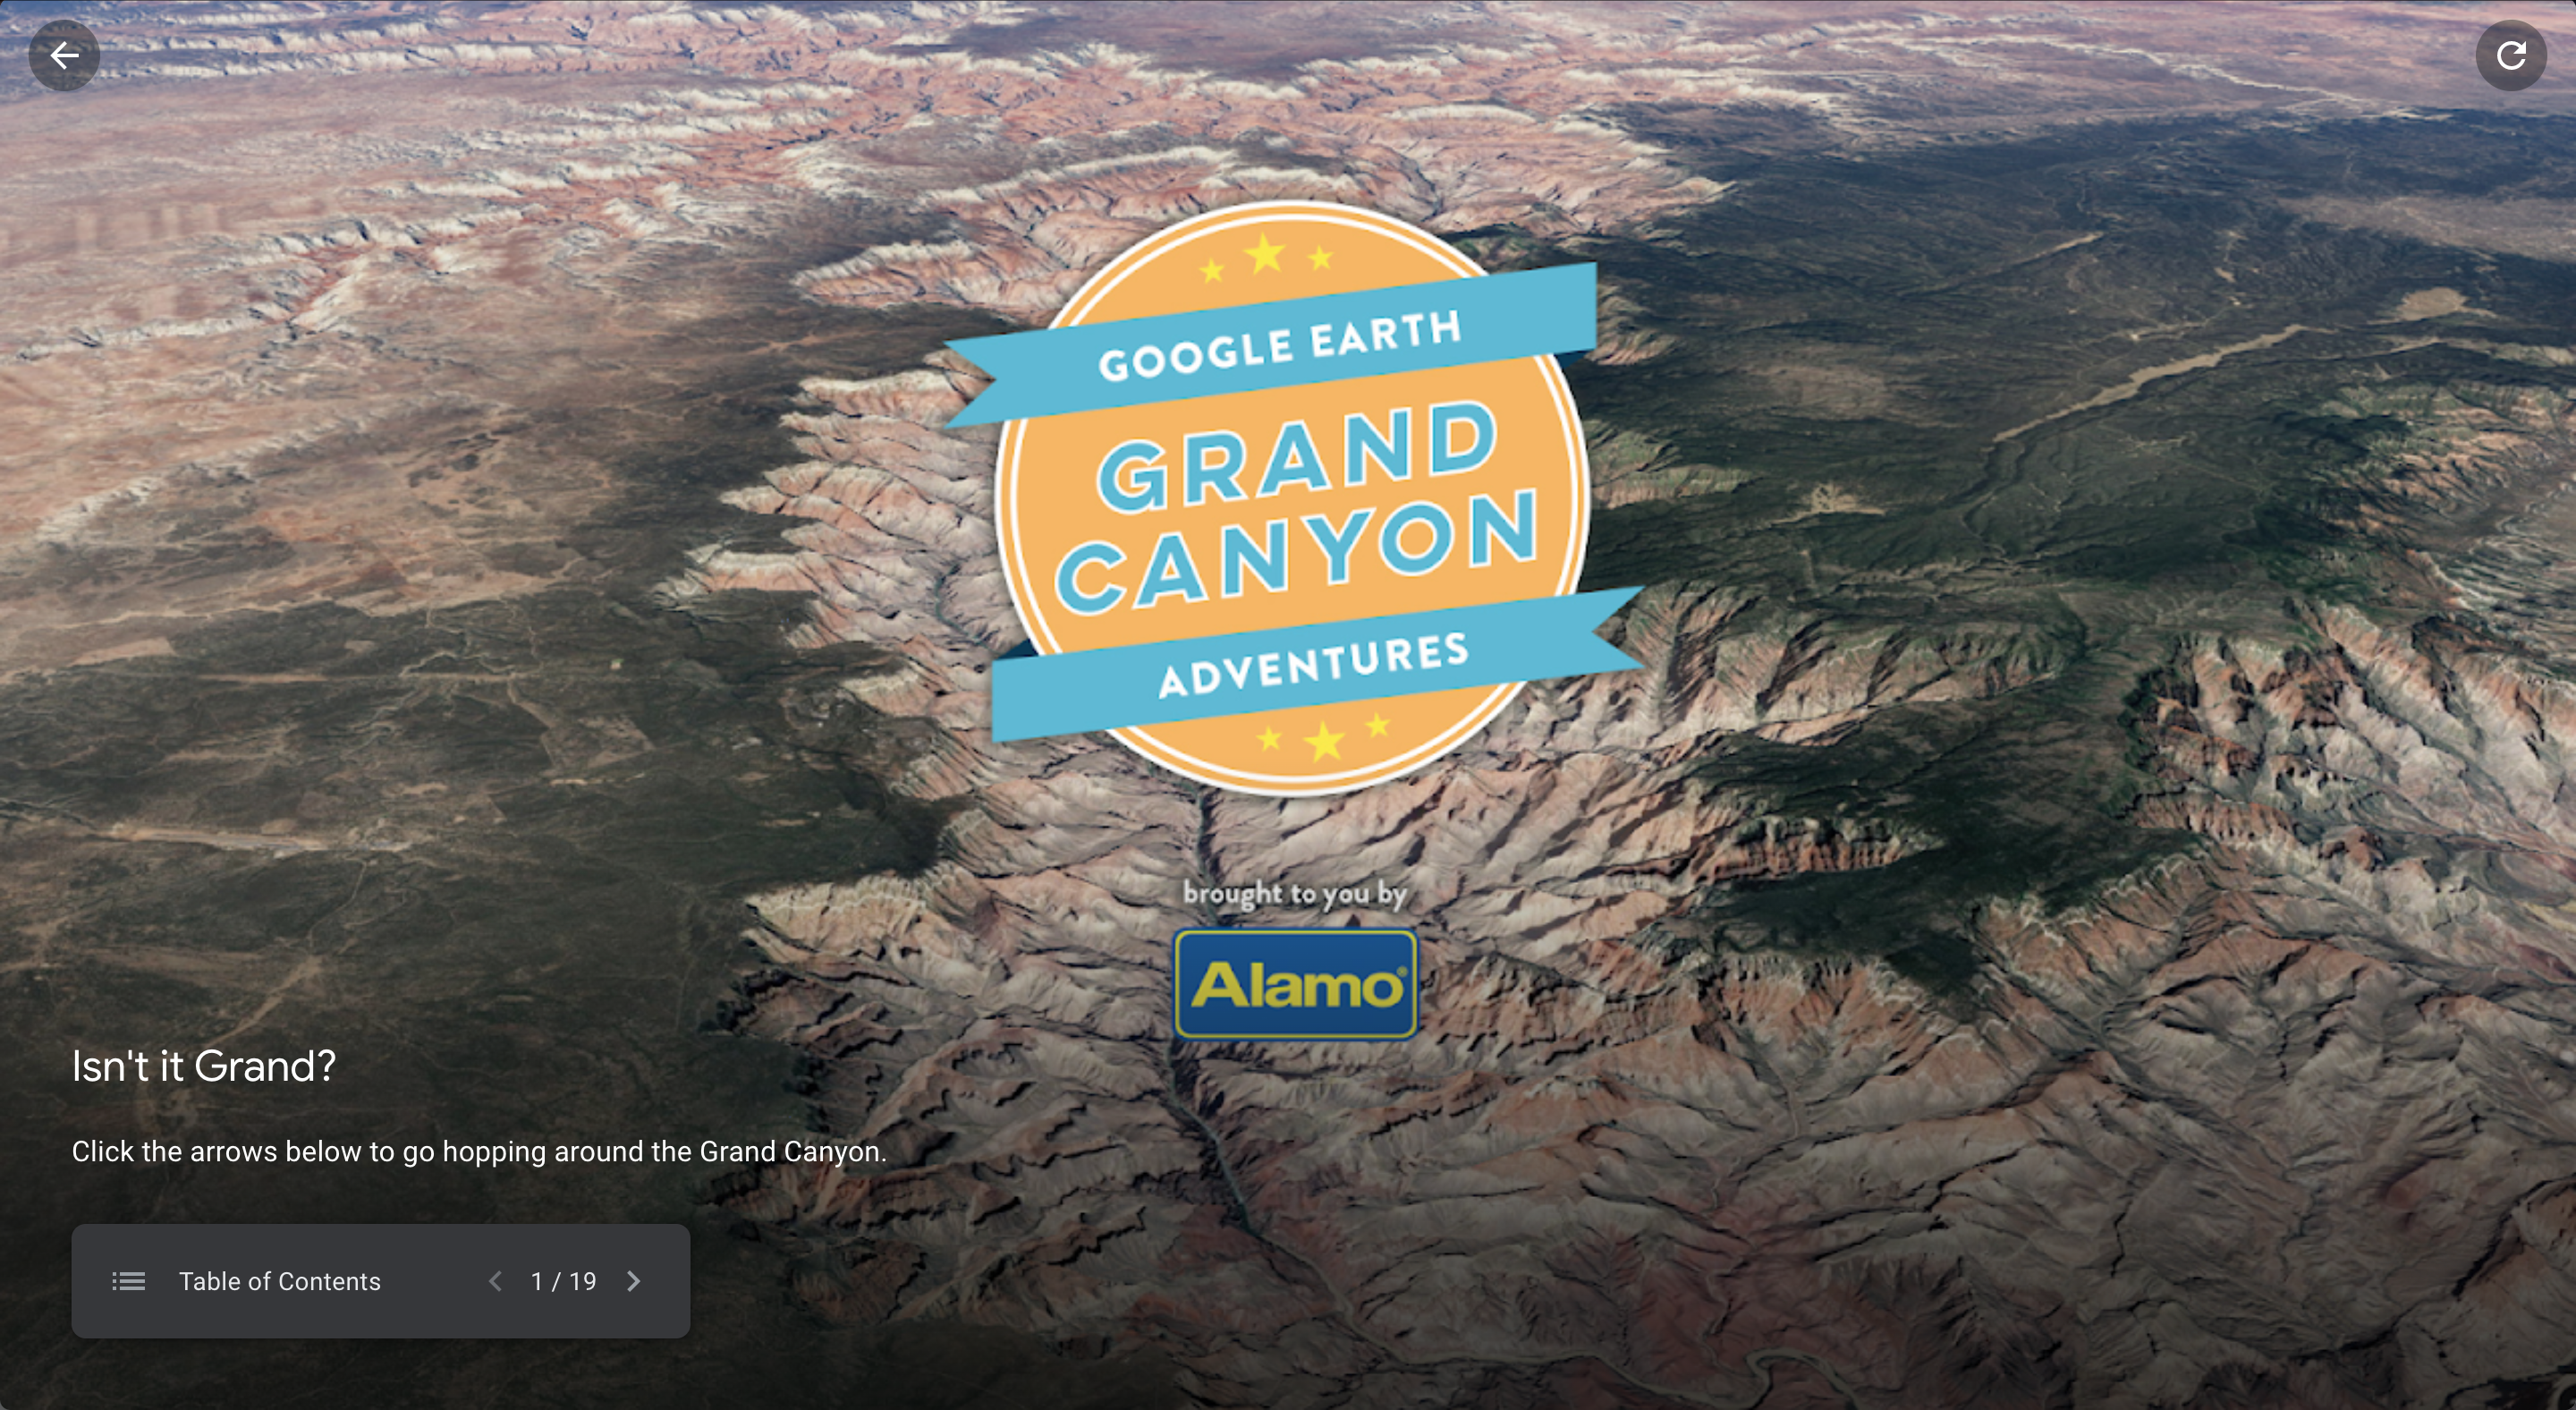 Alamo Google Earth Guide of the Grand Canyon 